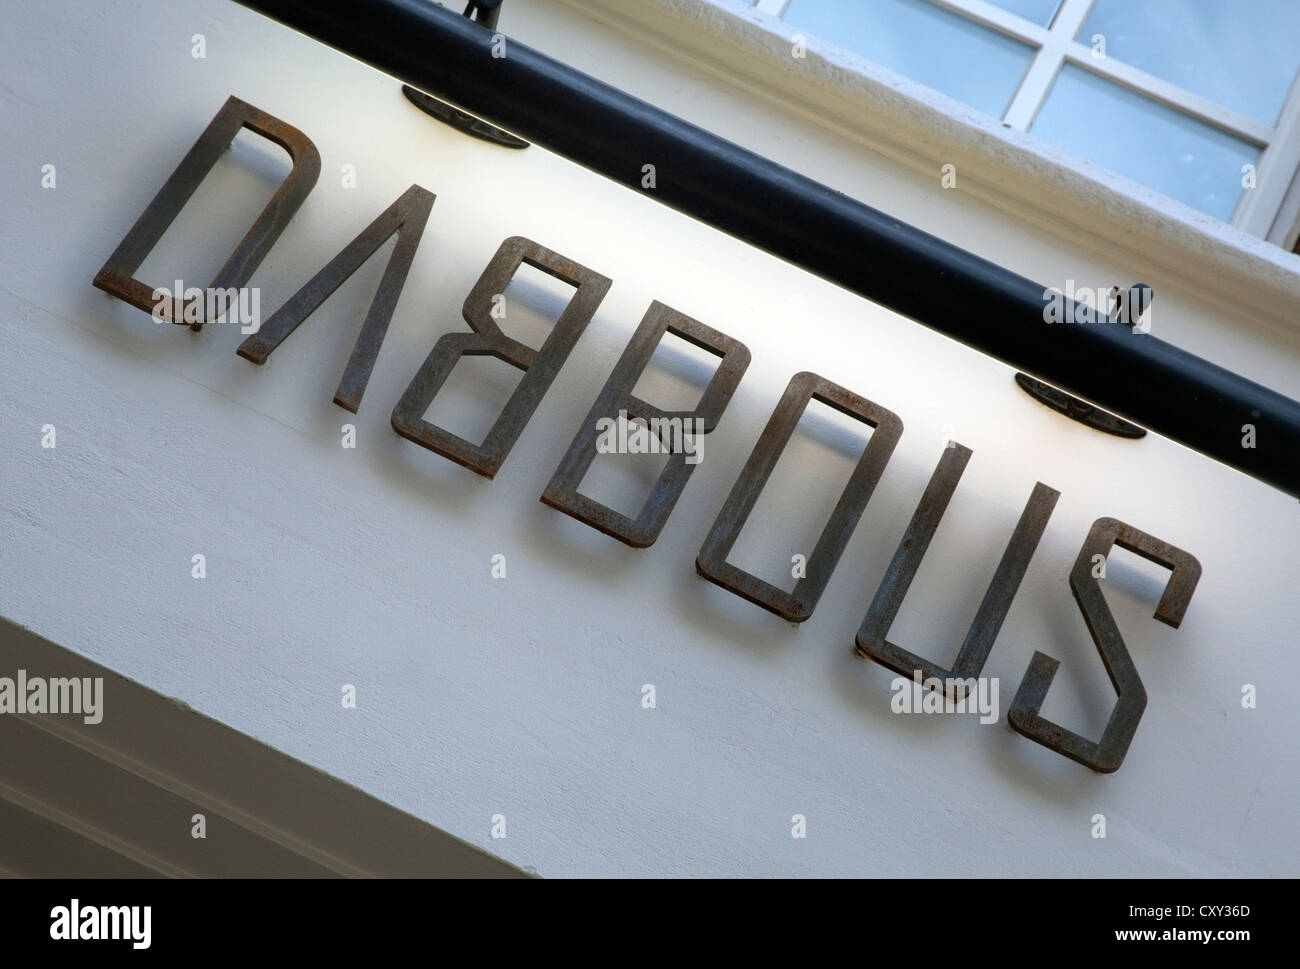 Michelin-starred restaurant Dabbous in Fitzrovia, London Stock Photo